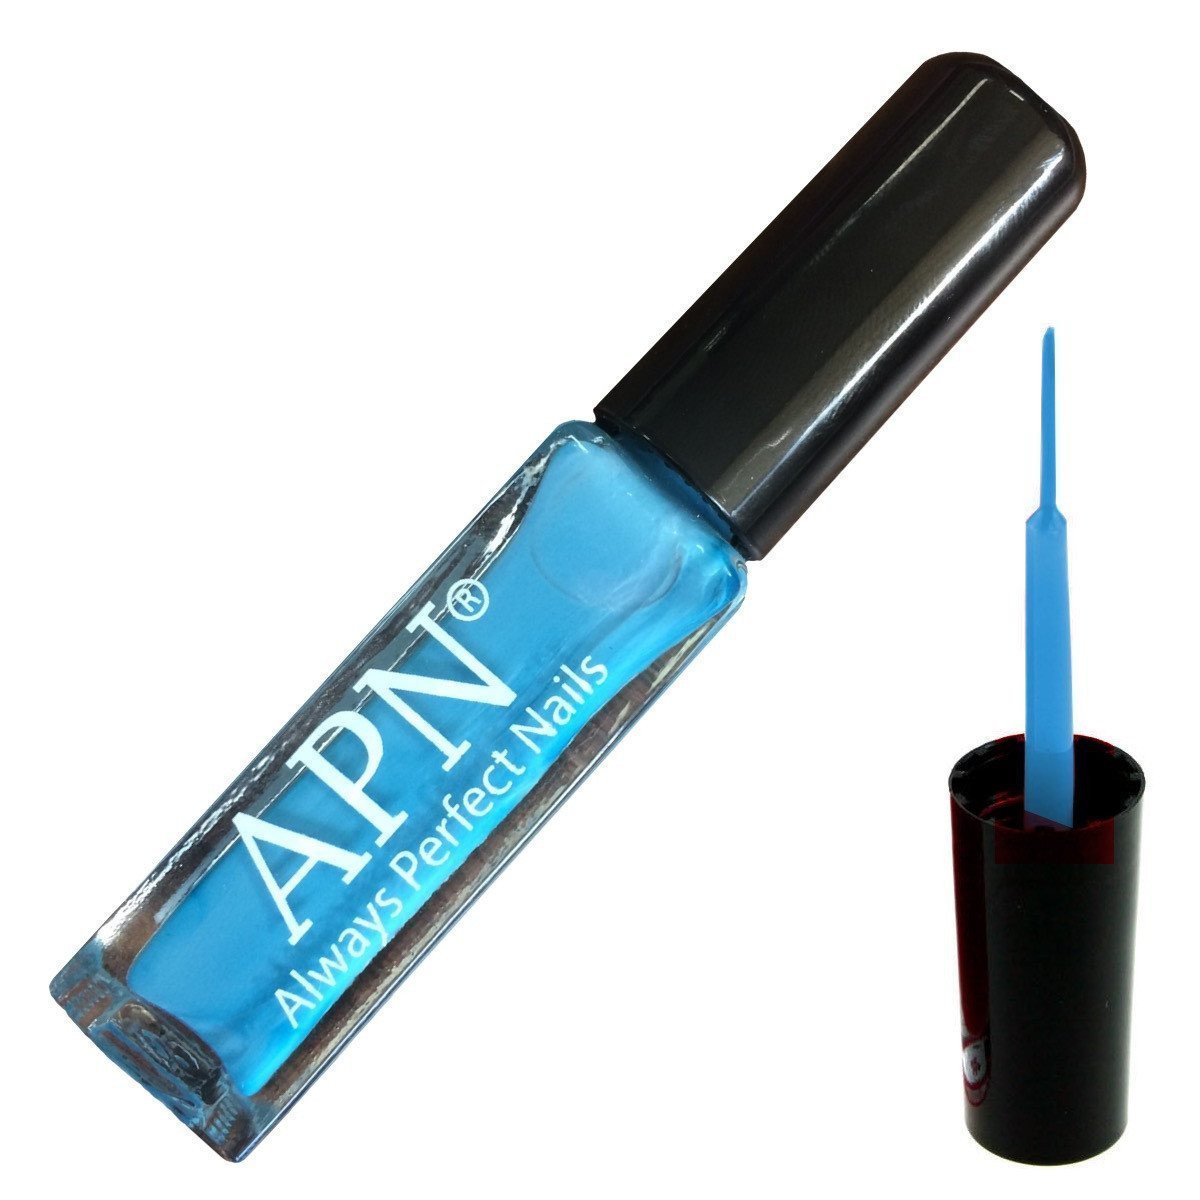 APN Nail Art Liner for Nail Polish Design line - Pastel Blue - beautyhair.co.ukNails